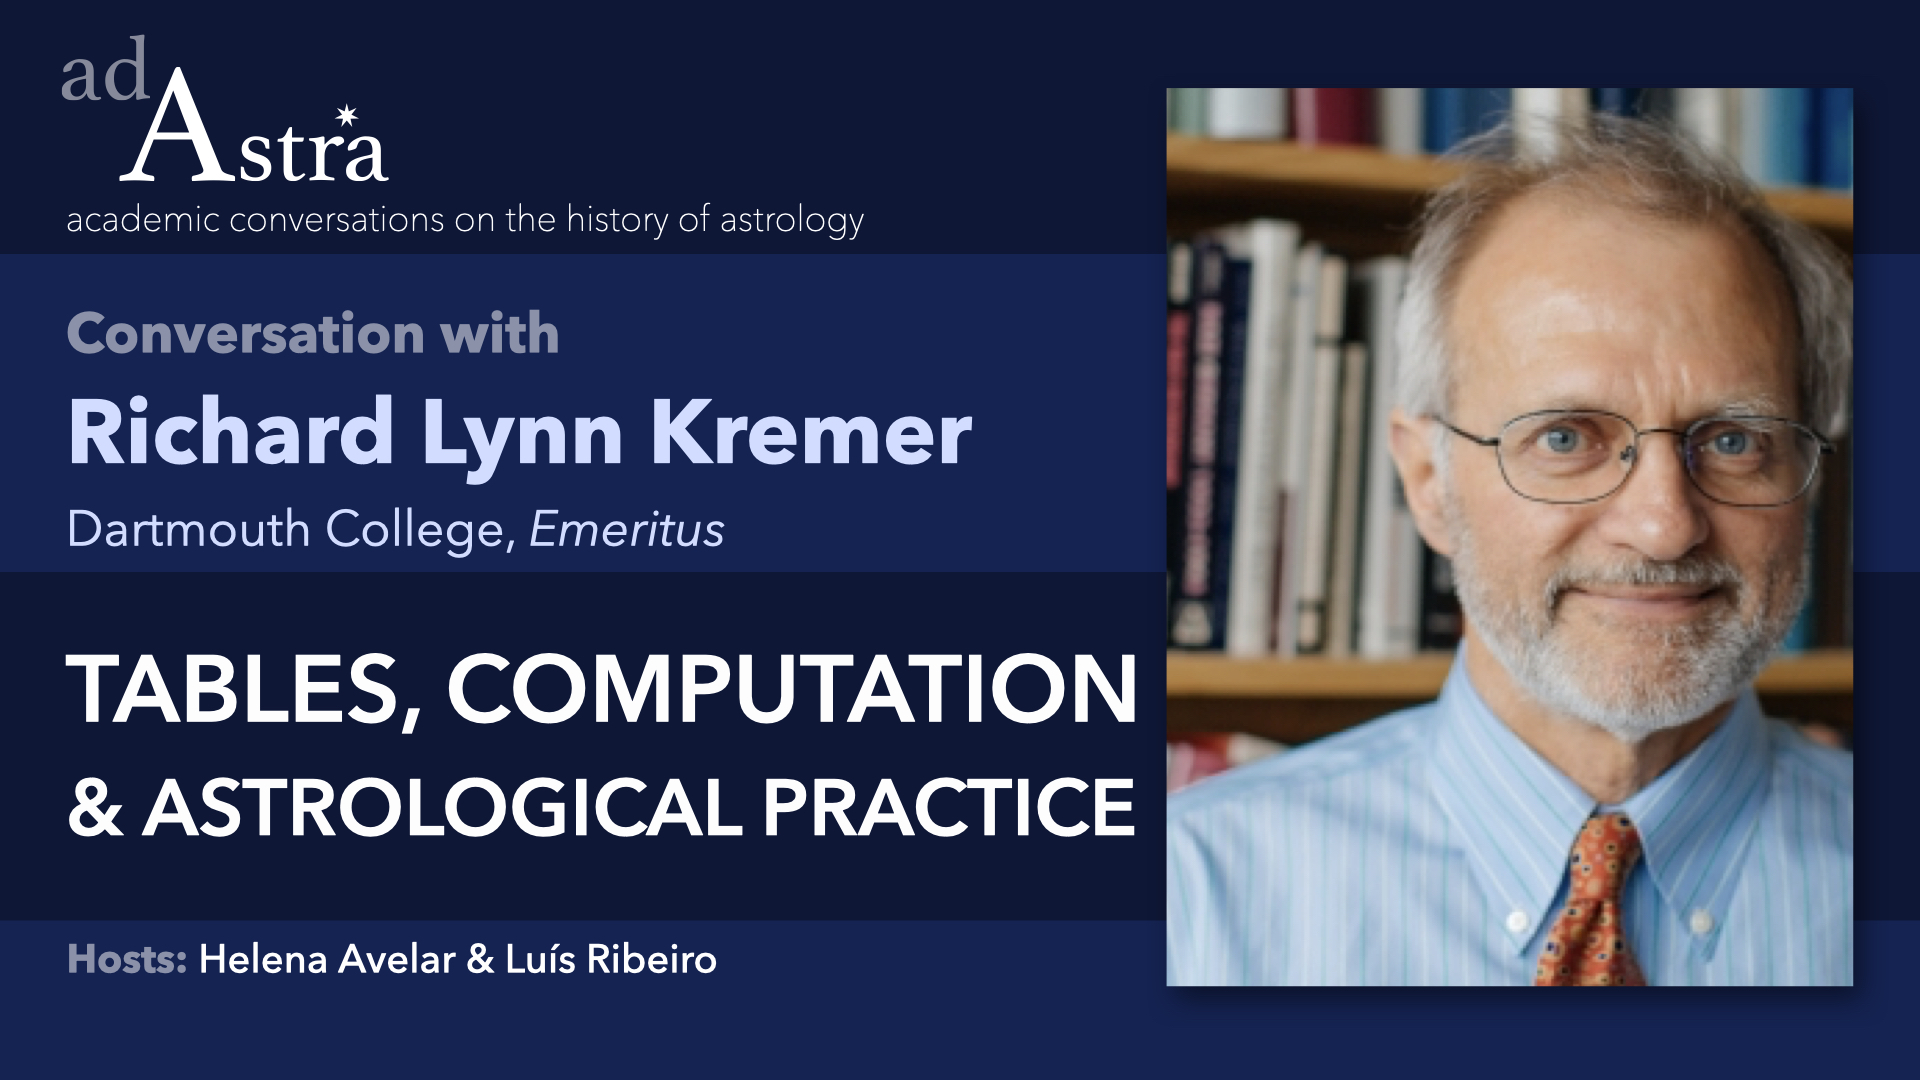 Tables, Computation & Astrological Practice with Richard Lynn Kremer